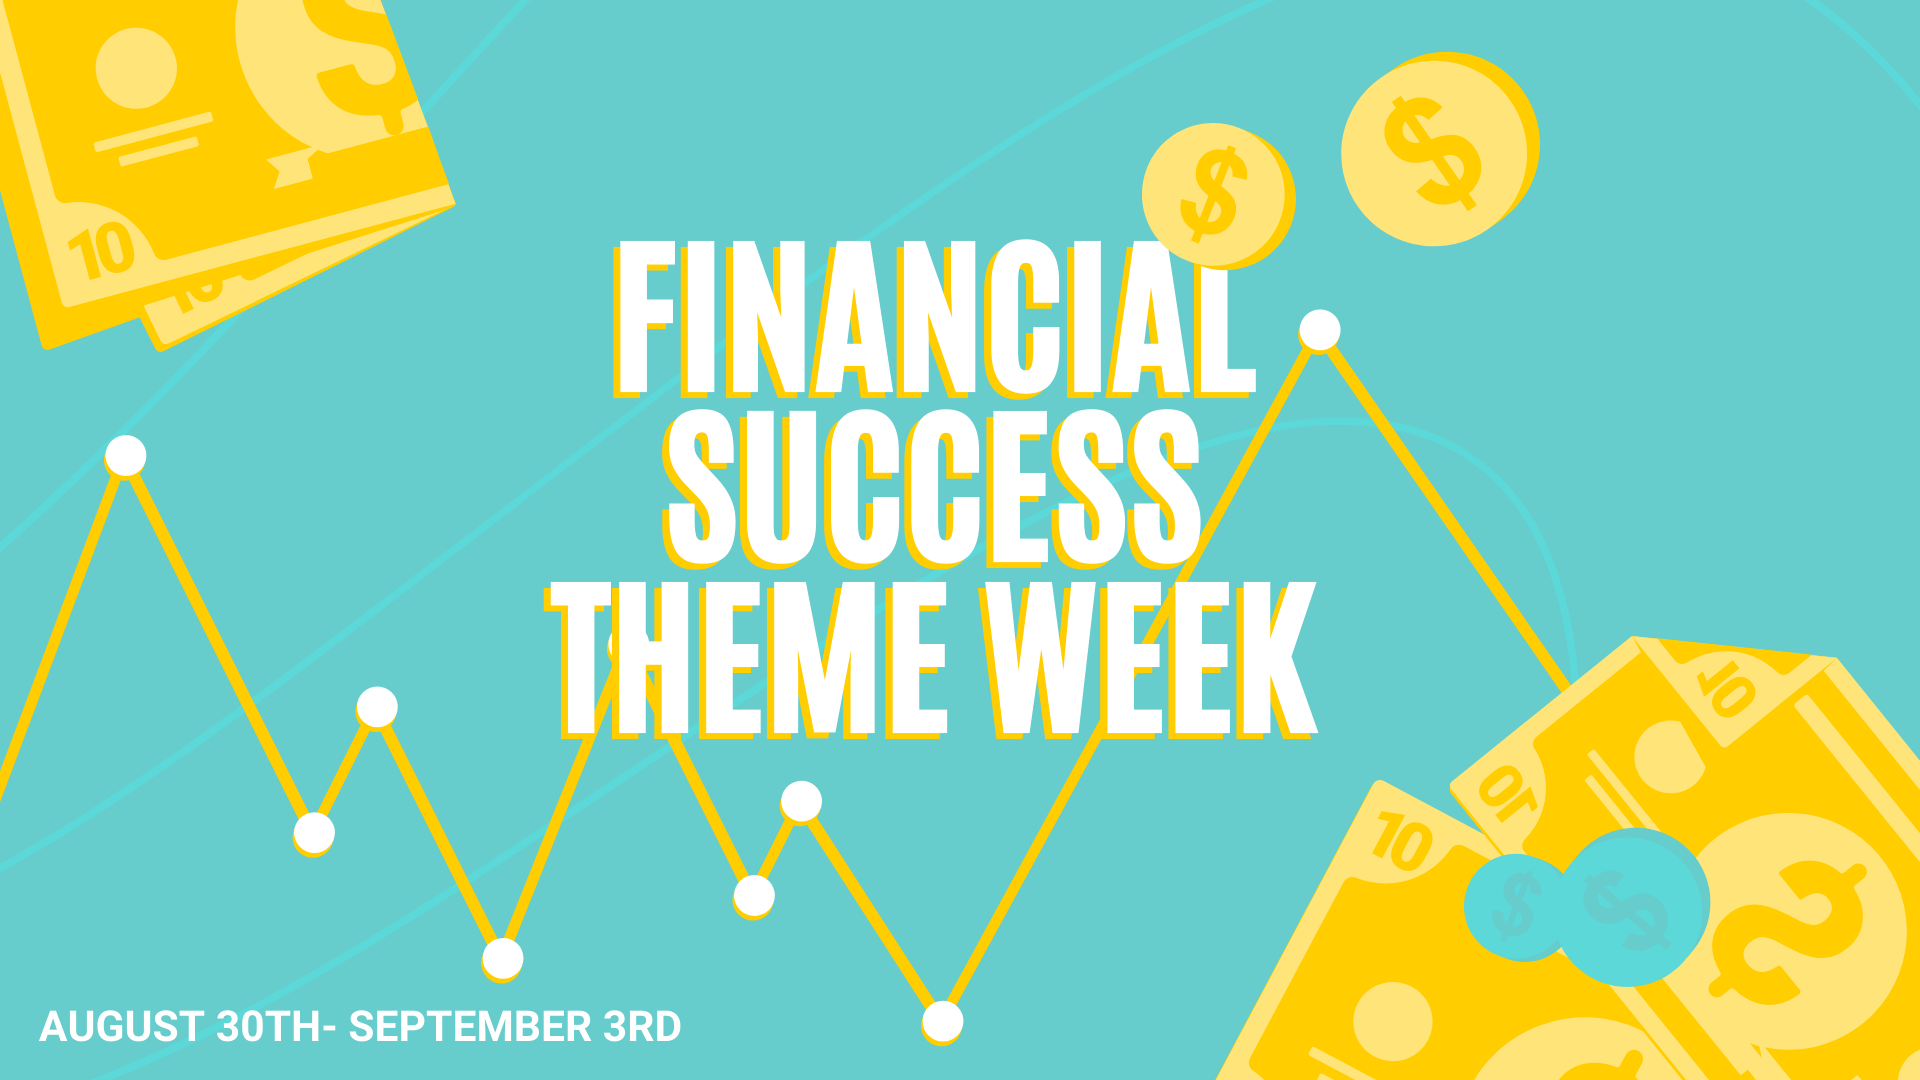 Financial Success Theme Week August 30th-September 3rd